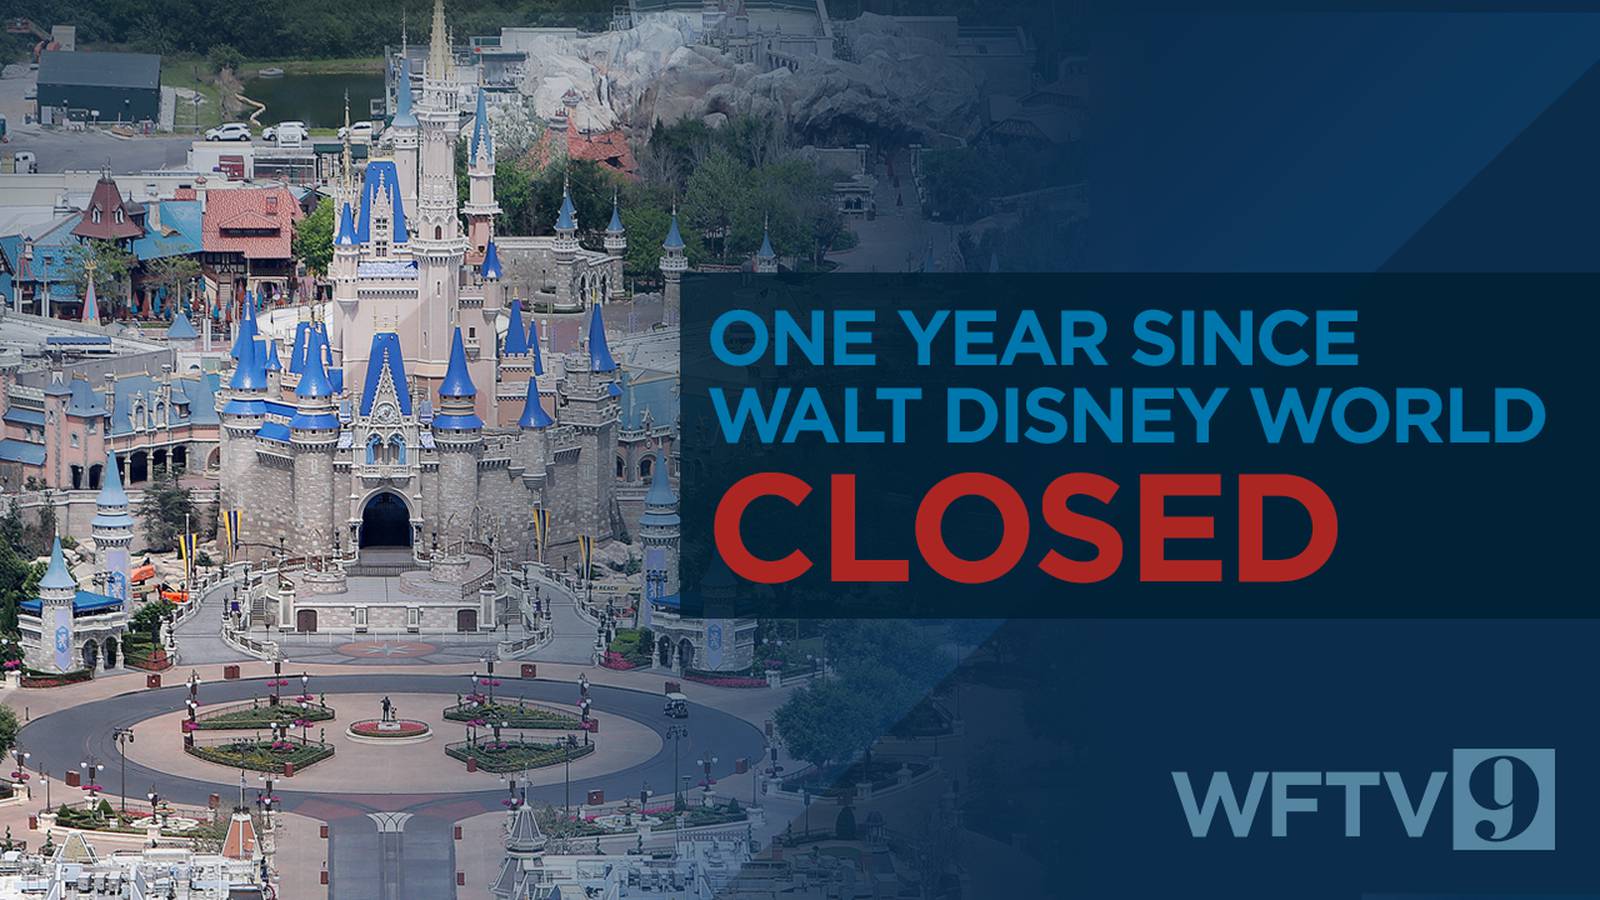 Looking back Walt Disney World shuts down a year ago today, impacting